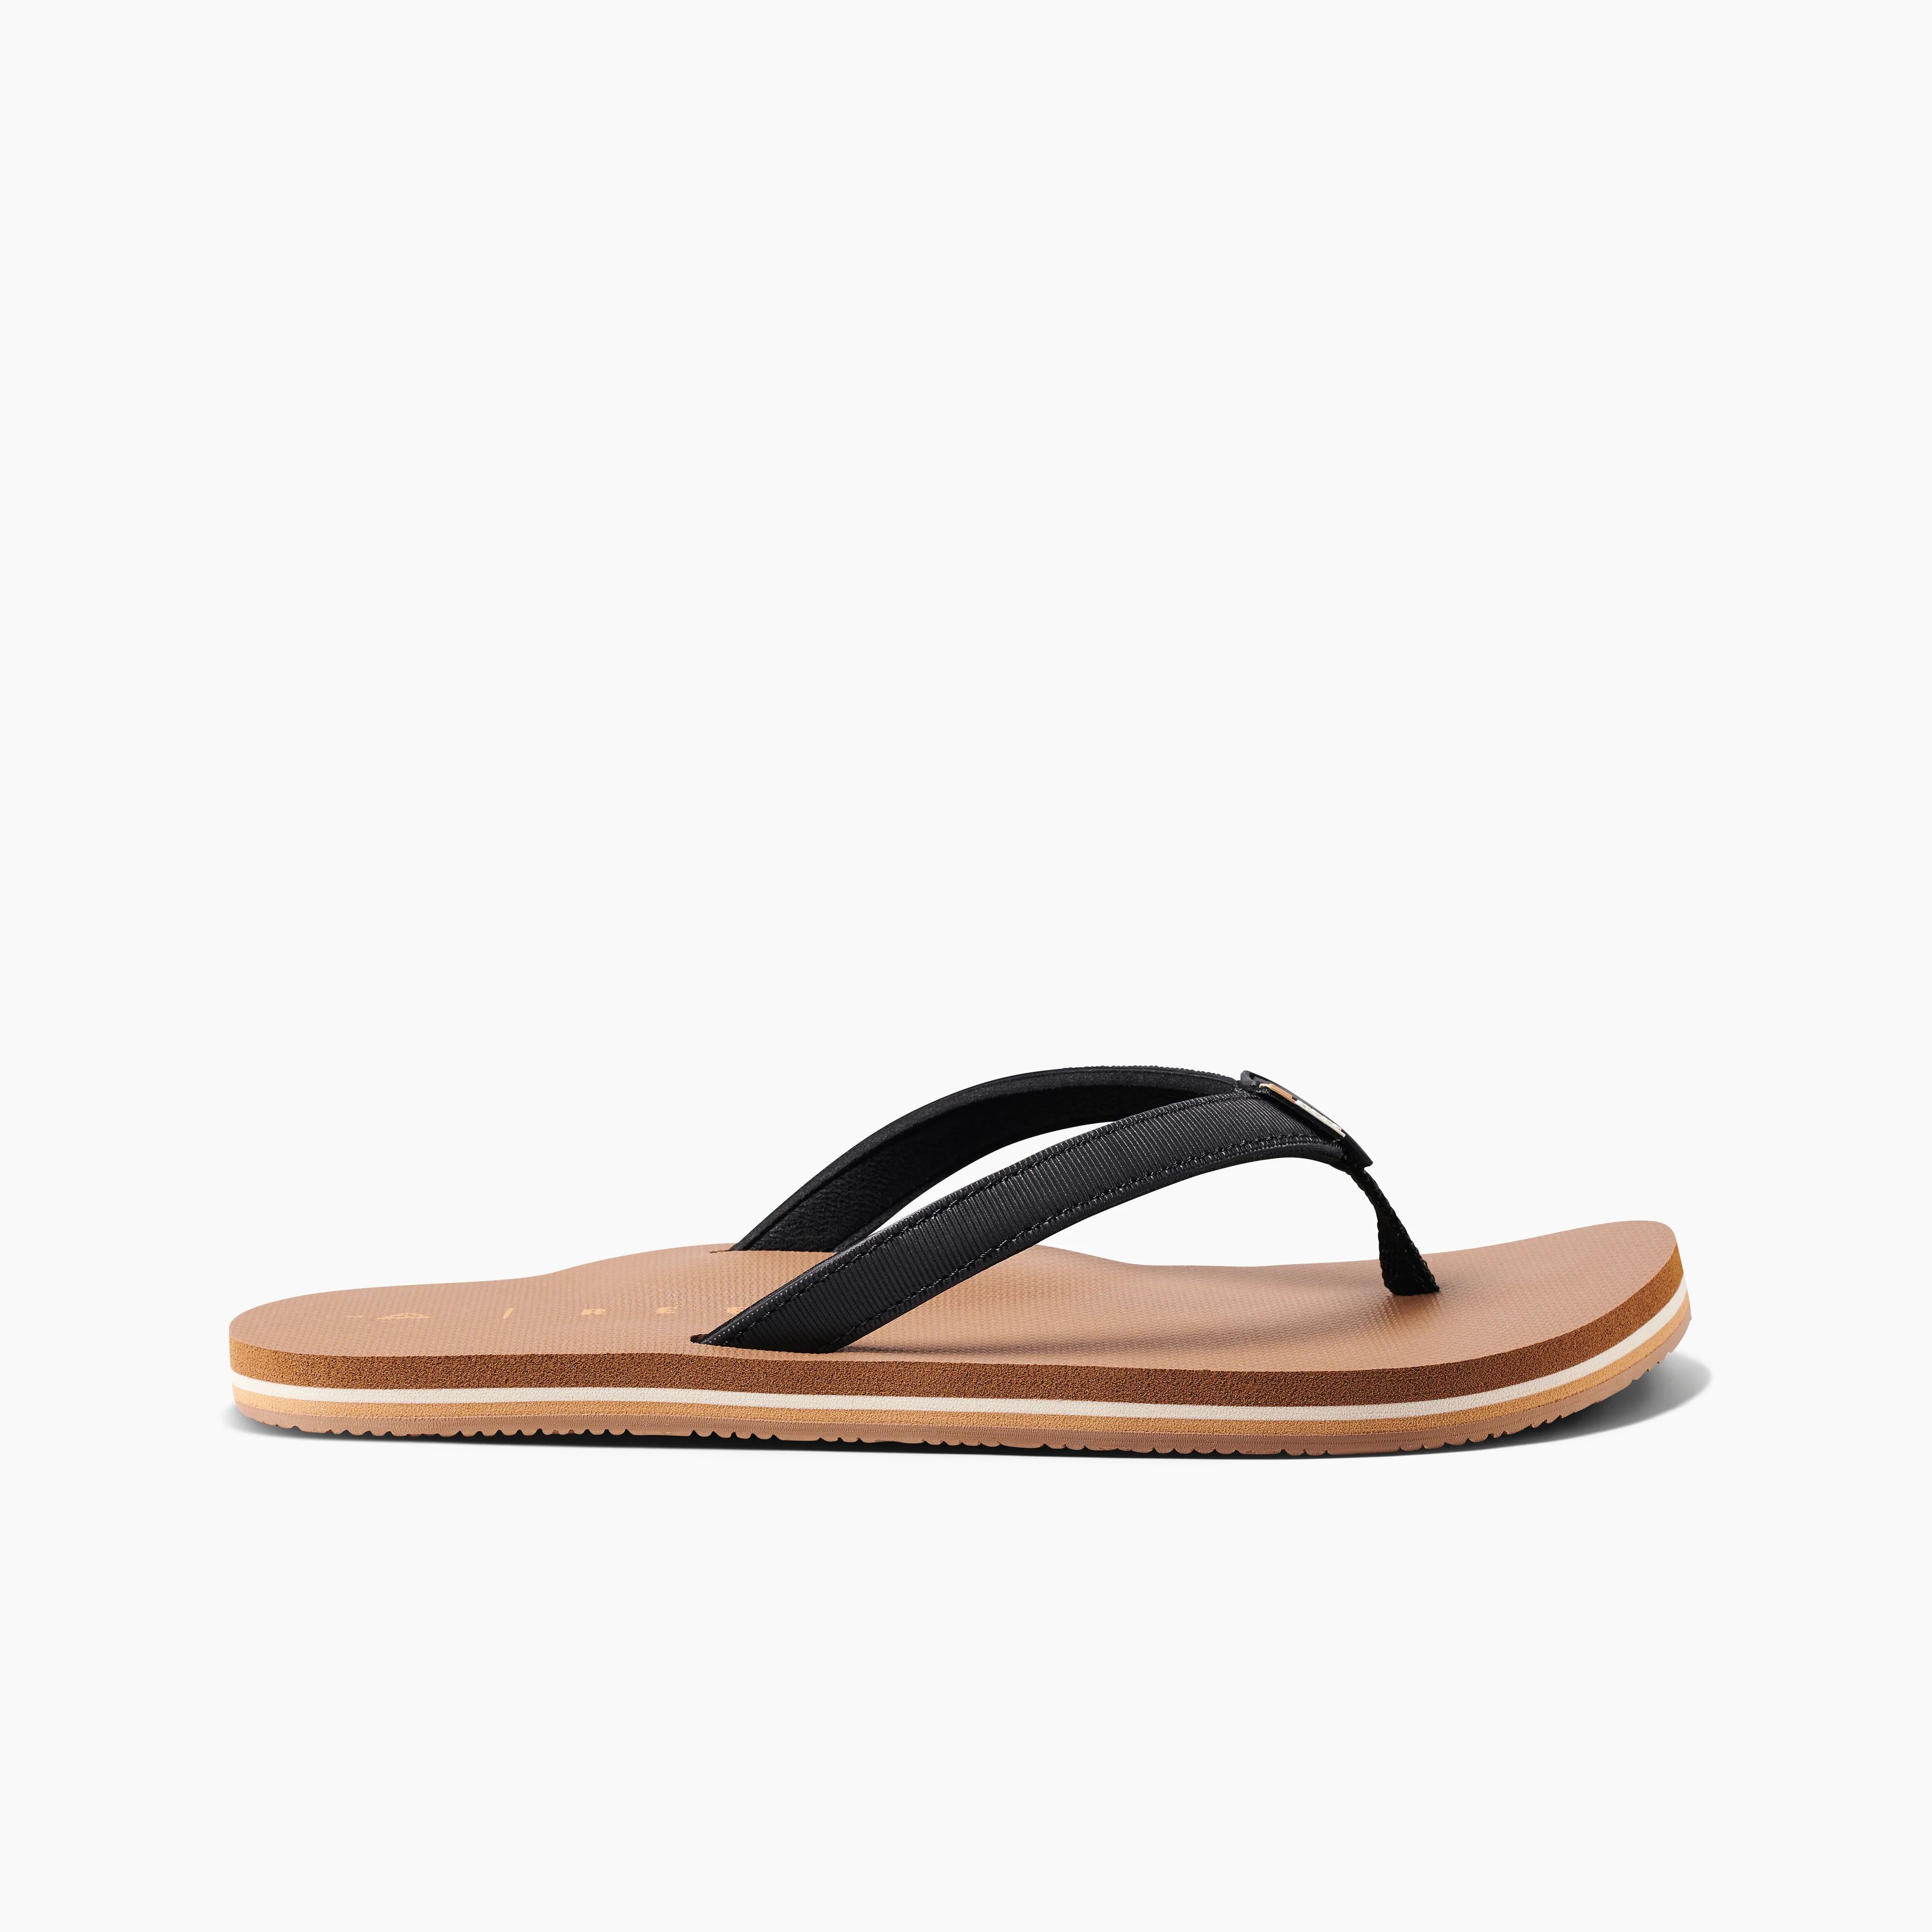 Women's Reef Solana Sandals in Black/Tan | REEF® | Reef